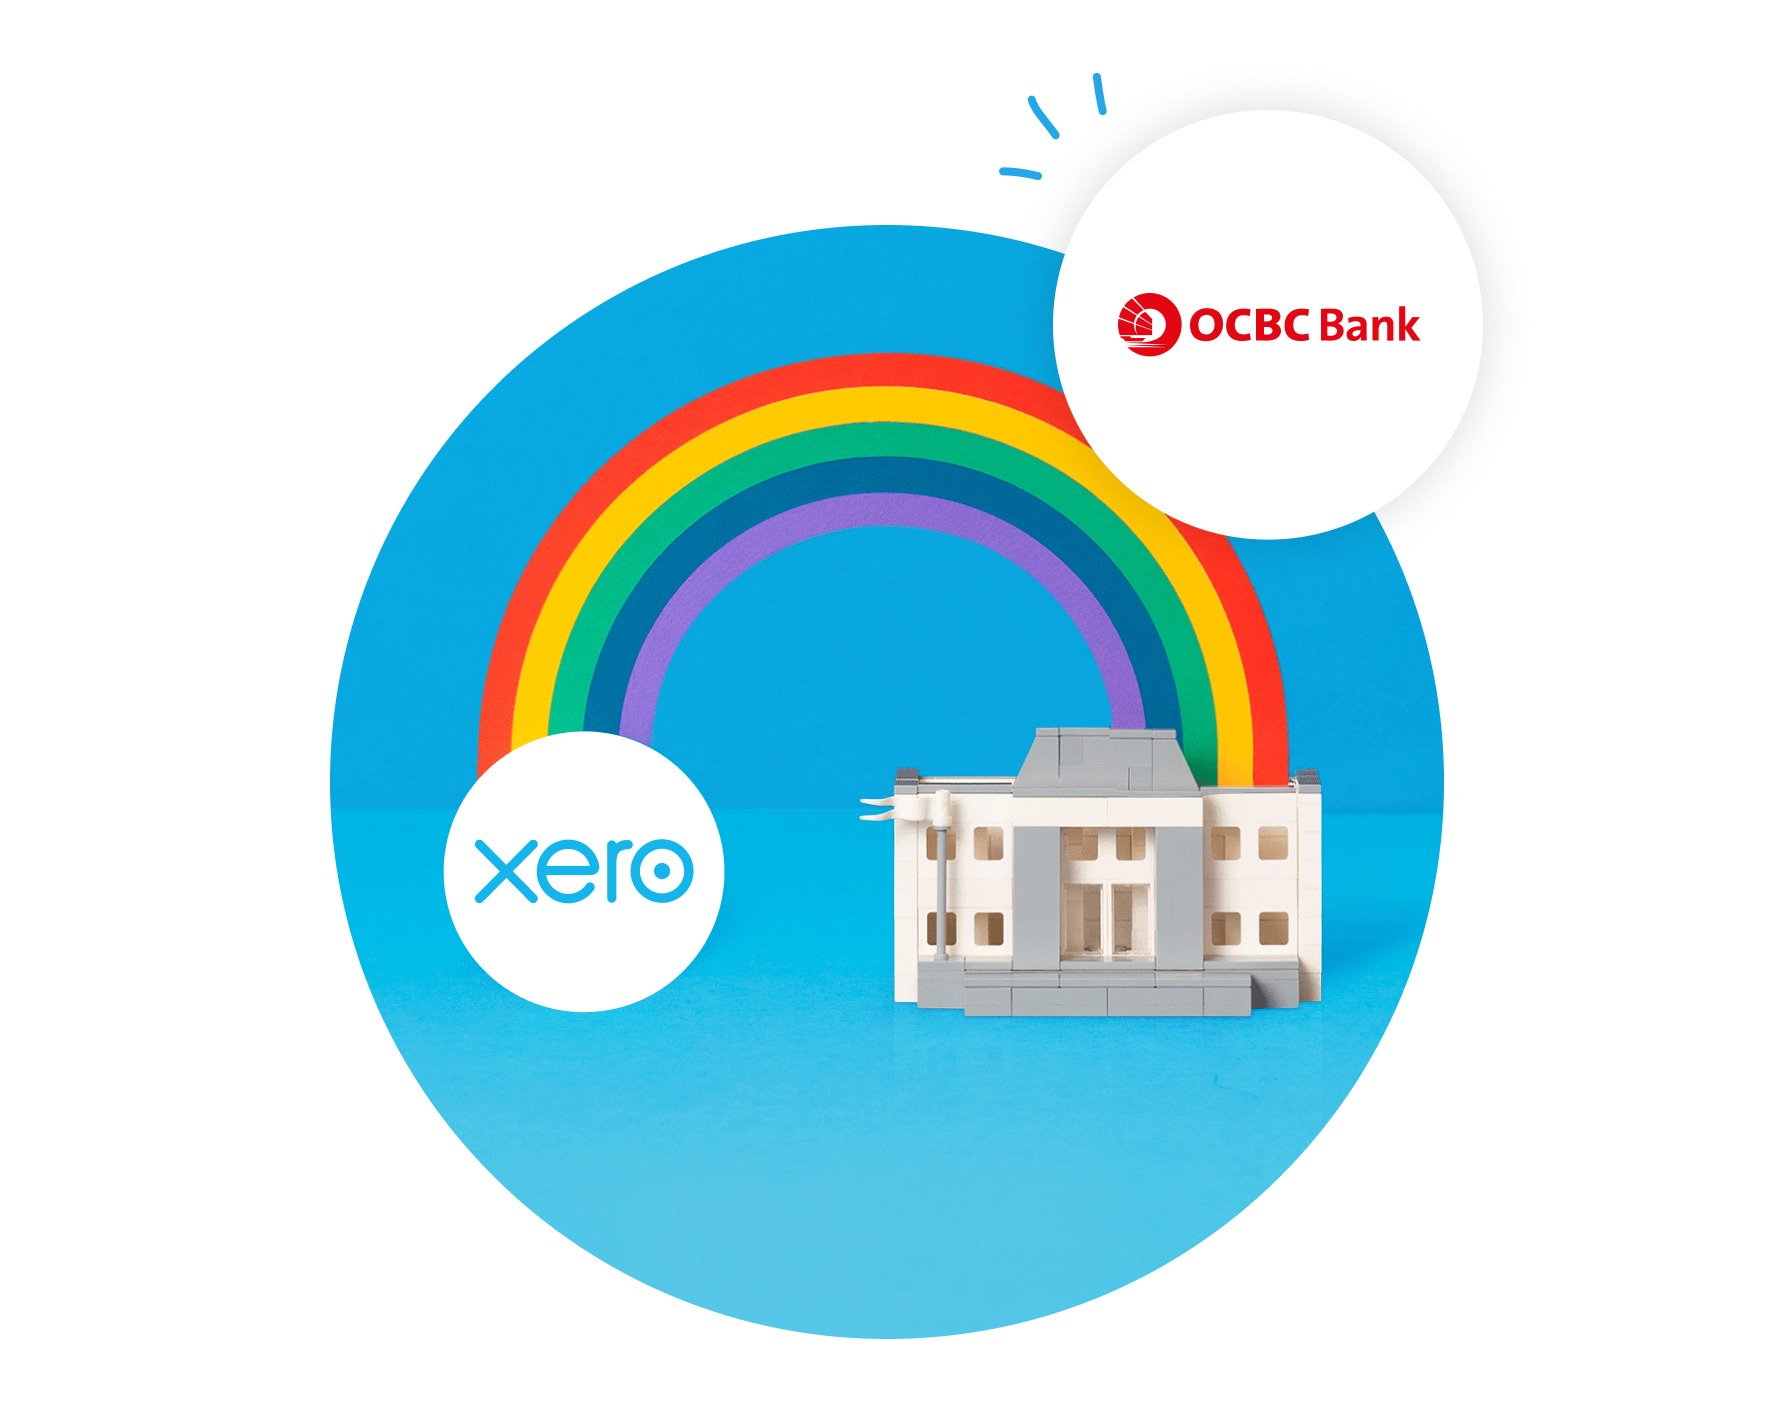 Image of Rainbow connecting the Xero logo and OCBC logo